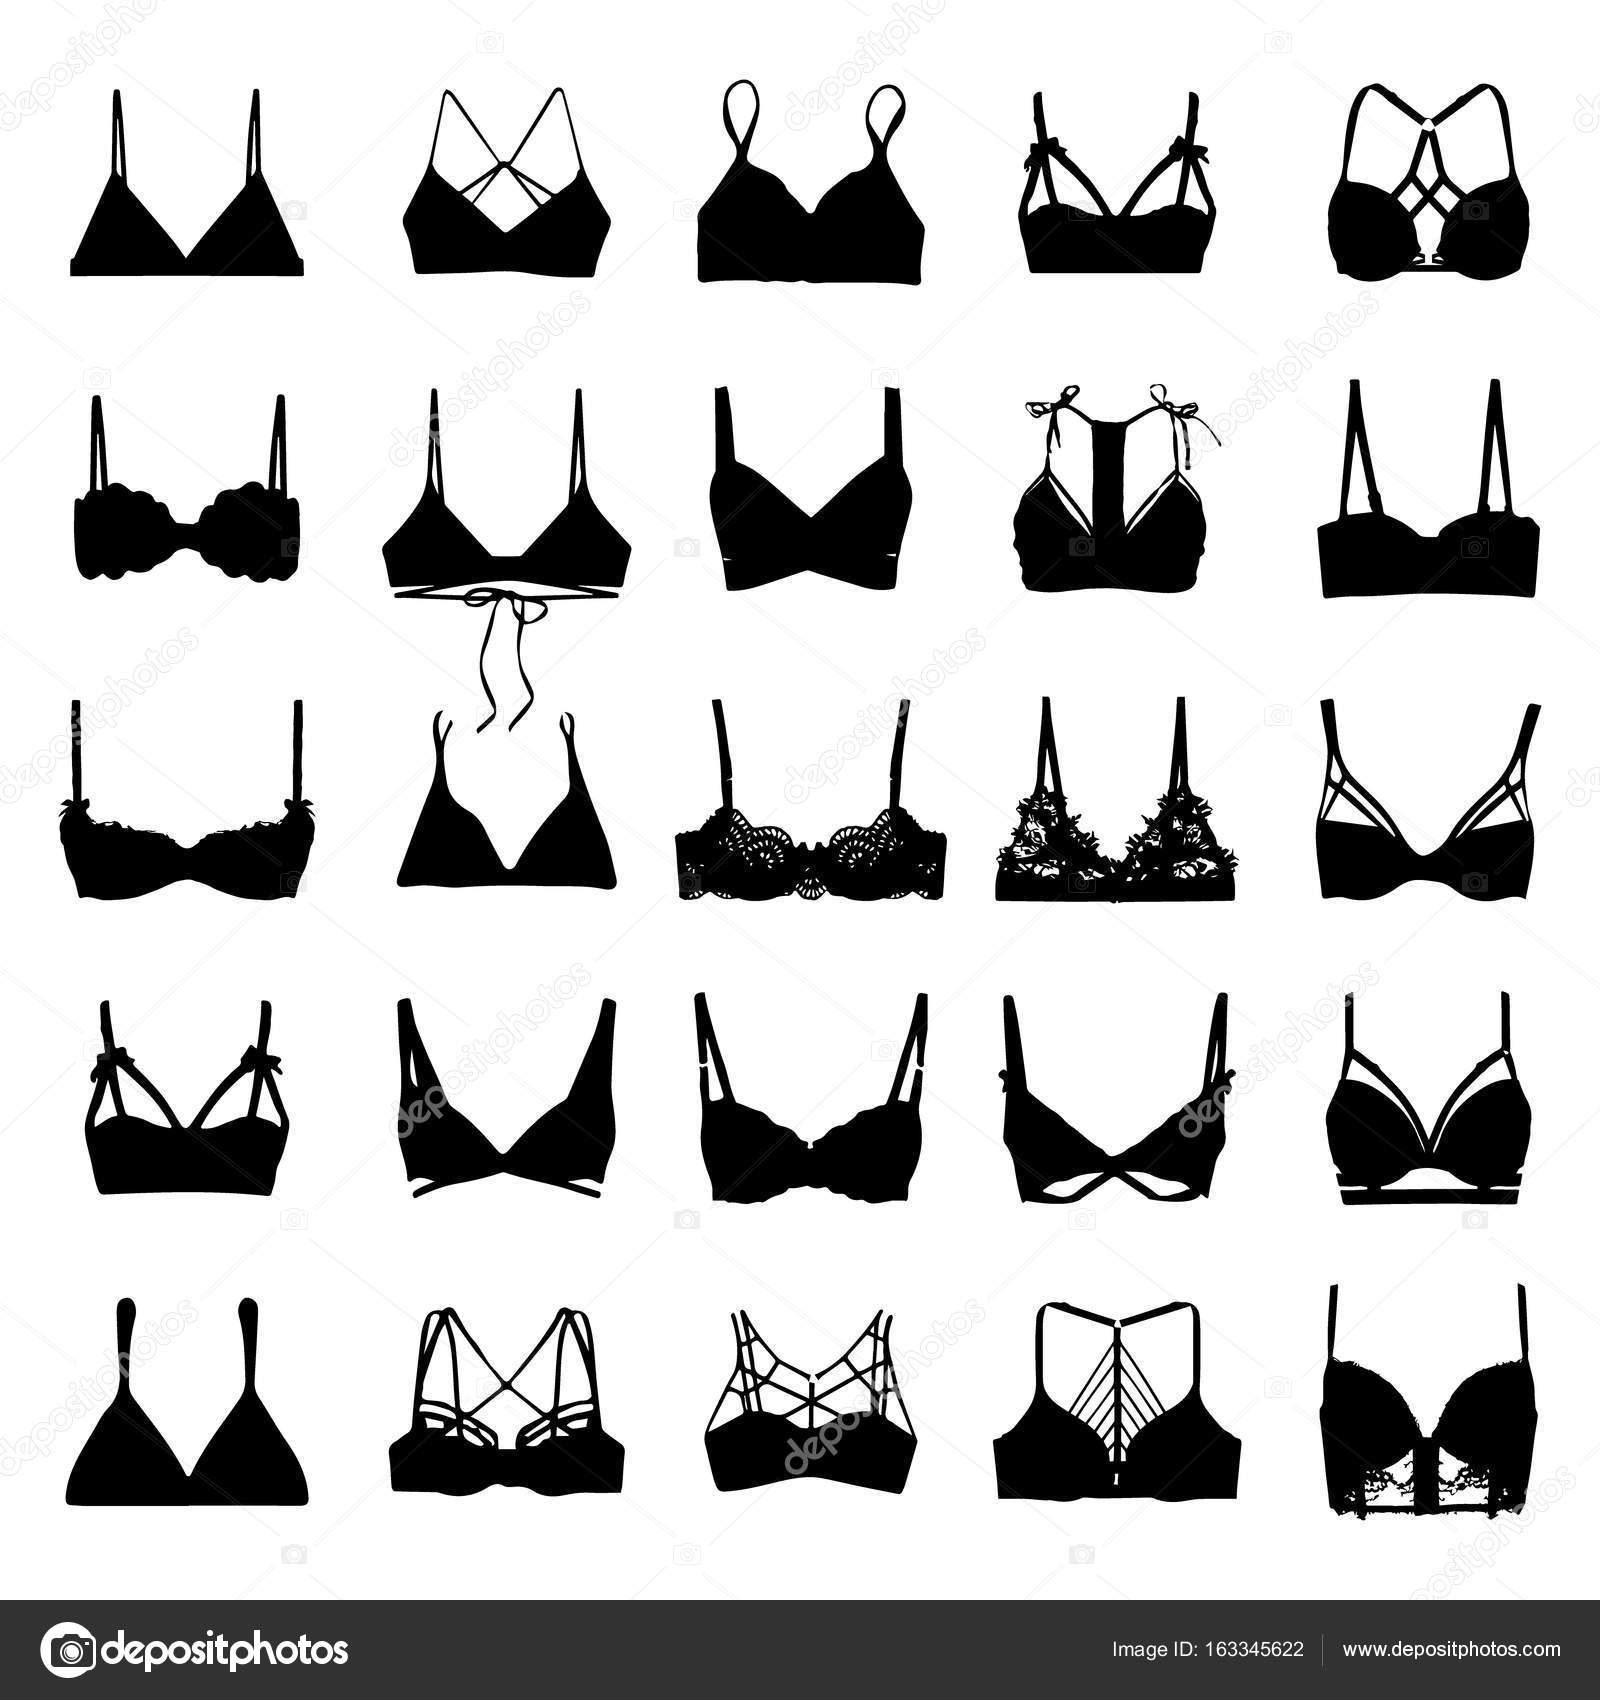 https://st3.depositphotos.com/9151590/16334/v/1600/depositphotos_163345622-stock-illustration-bra-woman-clothes-vector-silhouettes.jpg